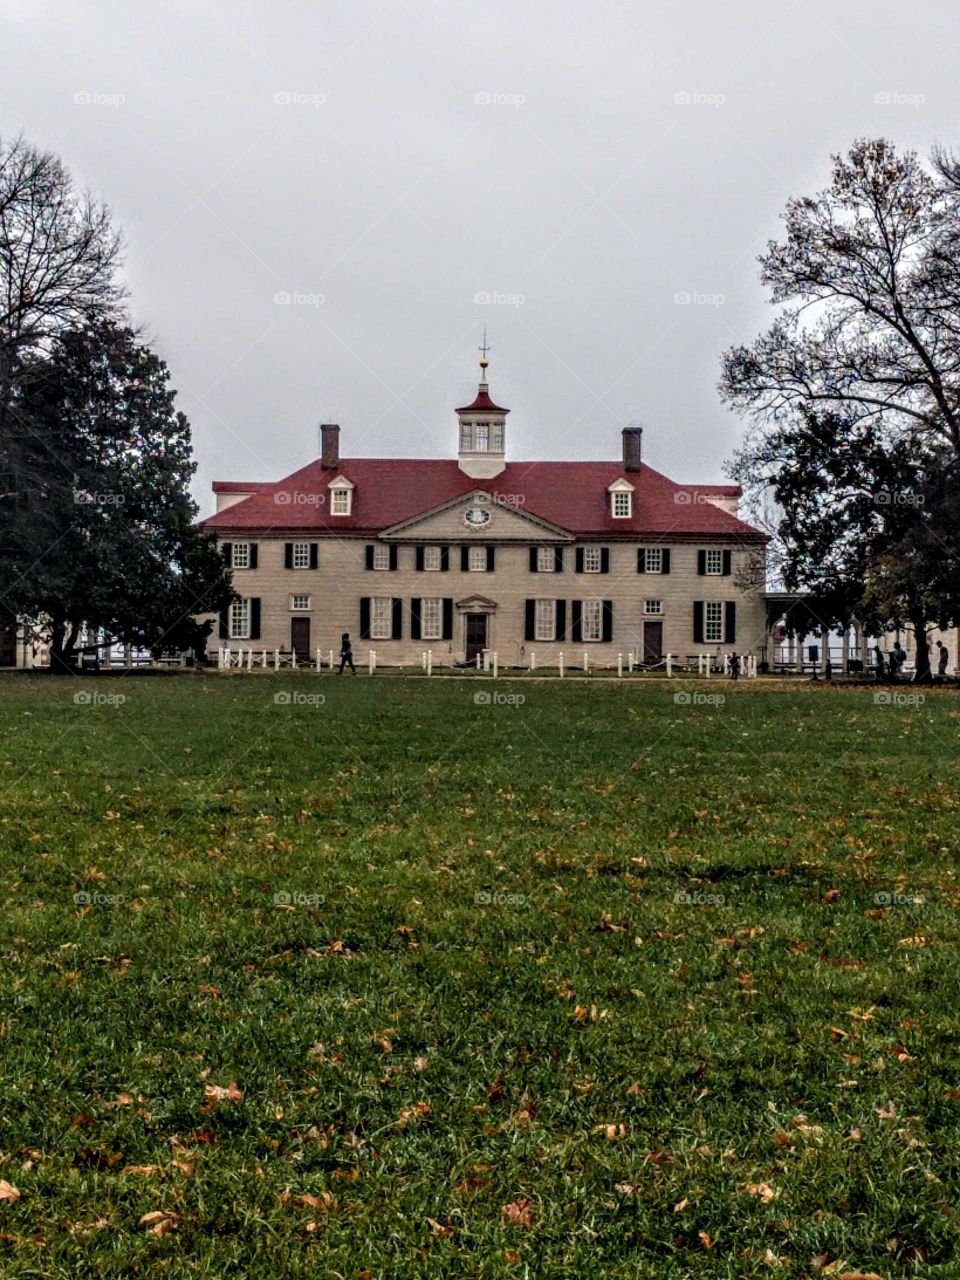 George Washington's​ home